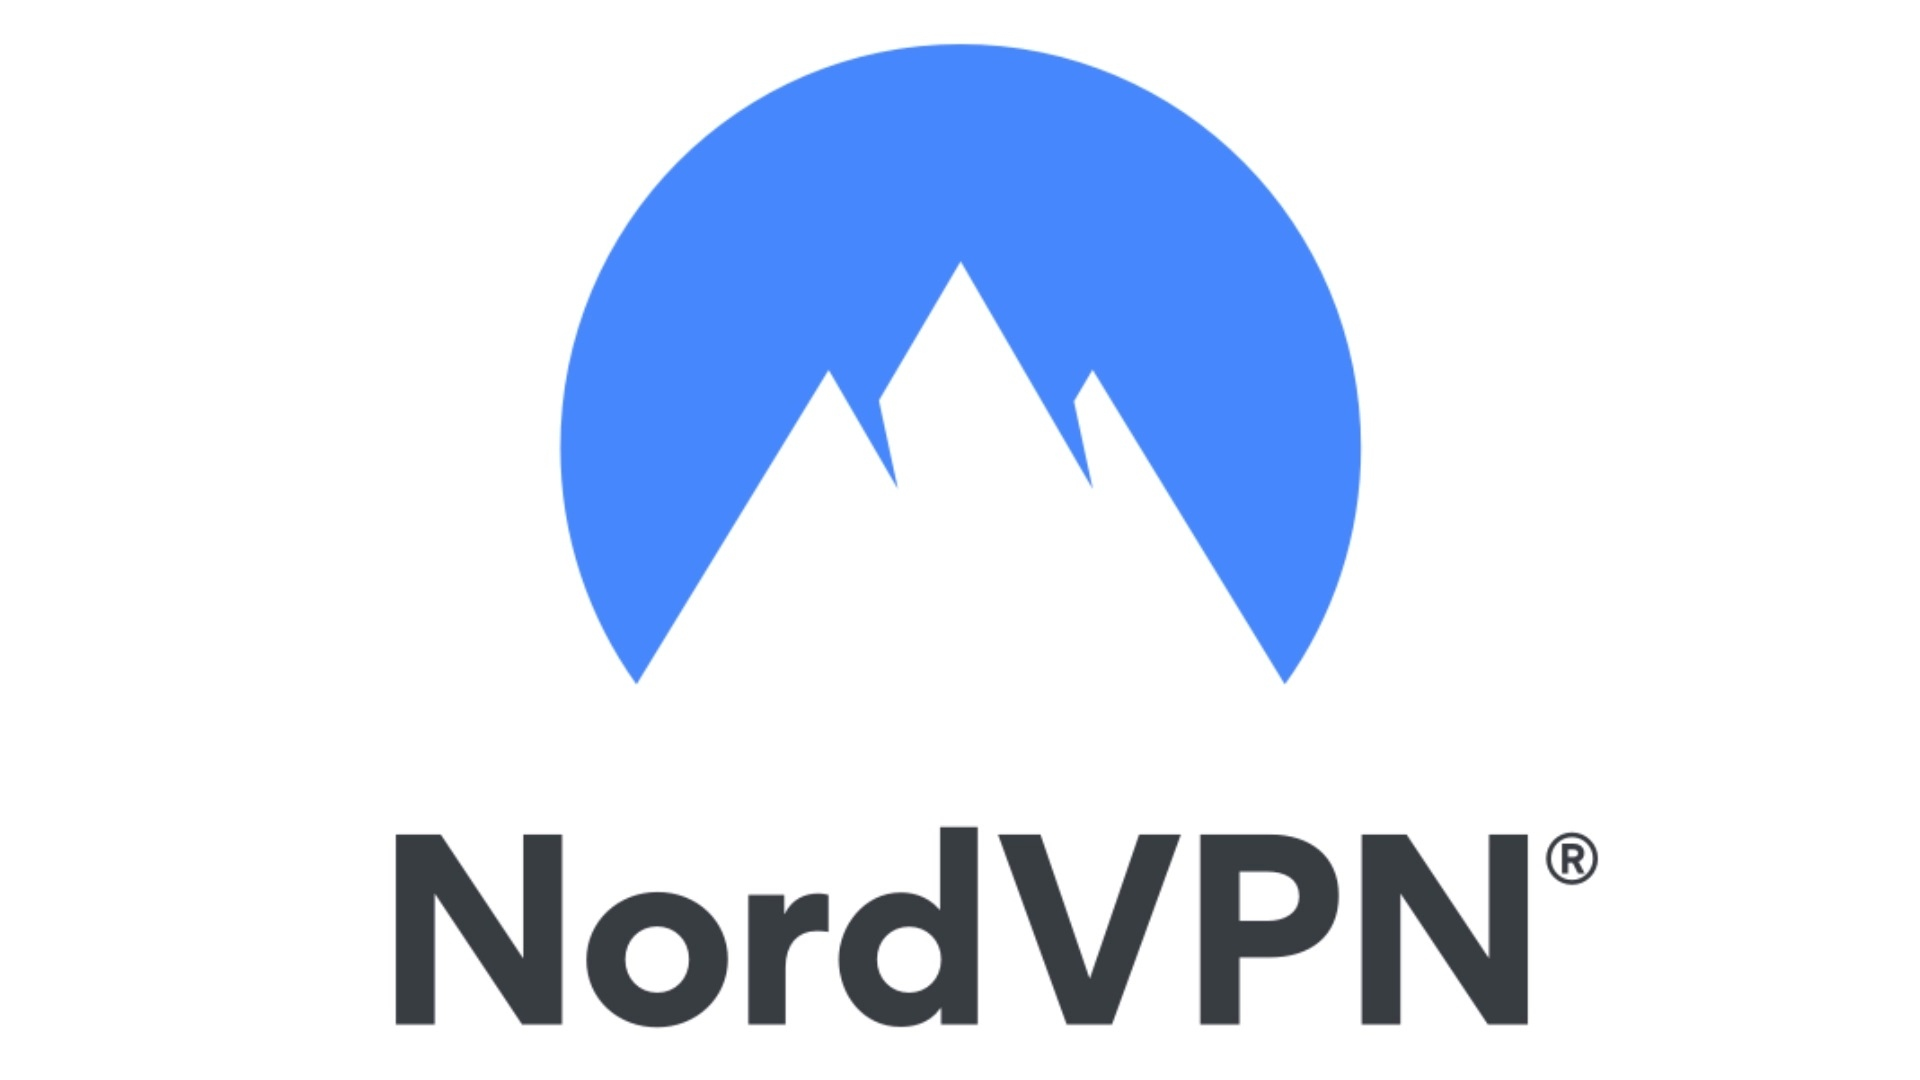 VPN deals: NordVPN. Image shows the company logo.